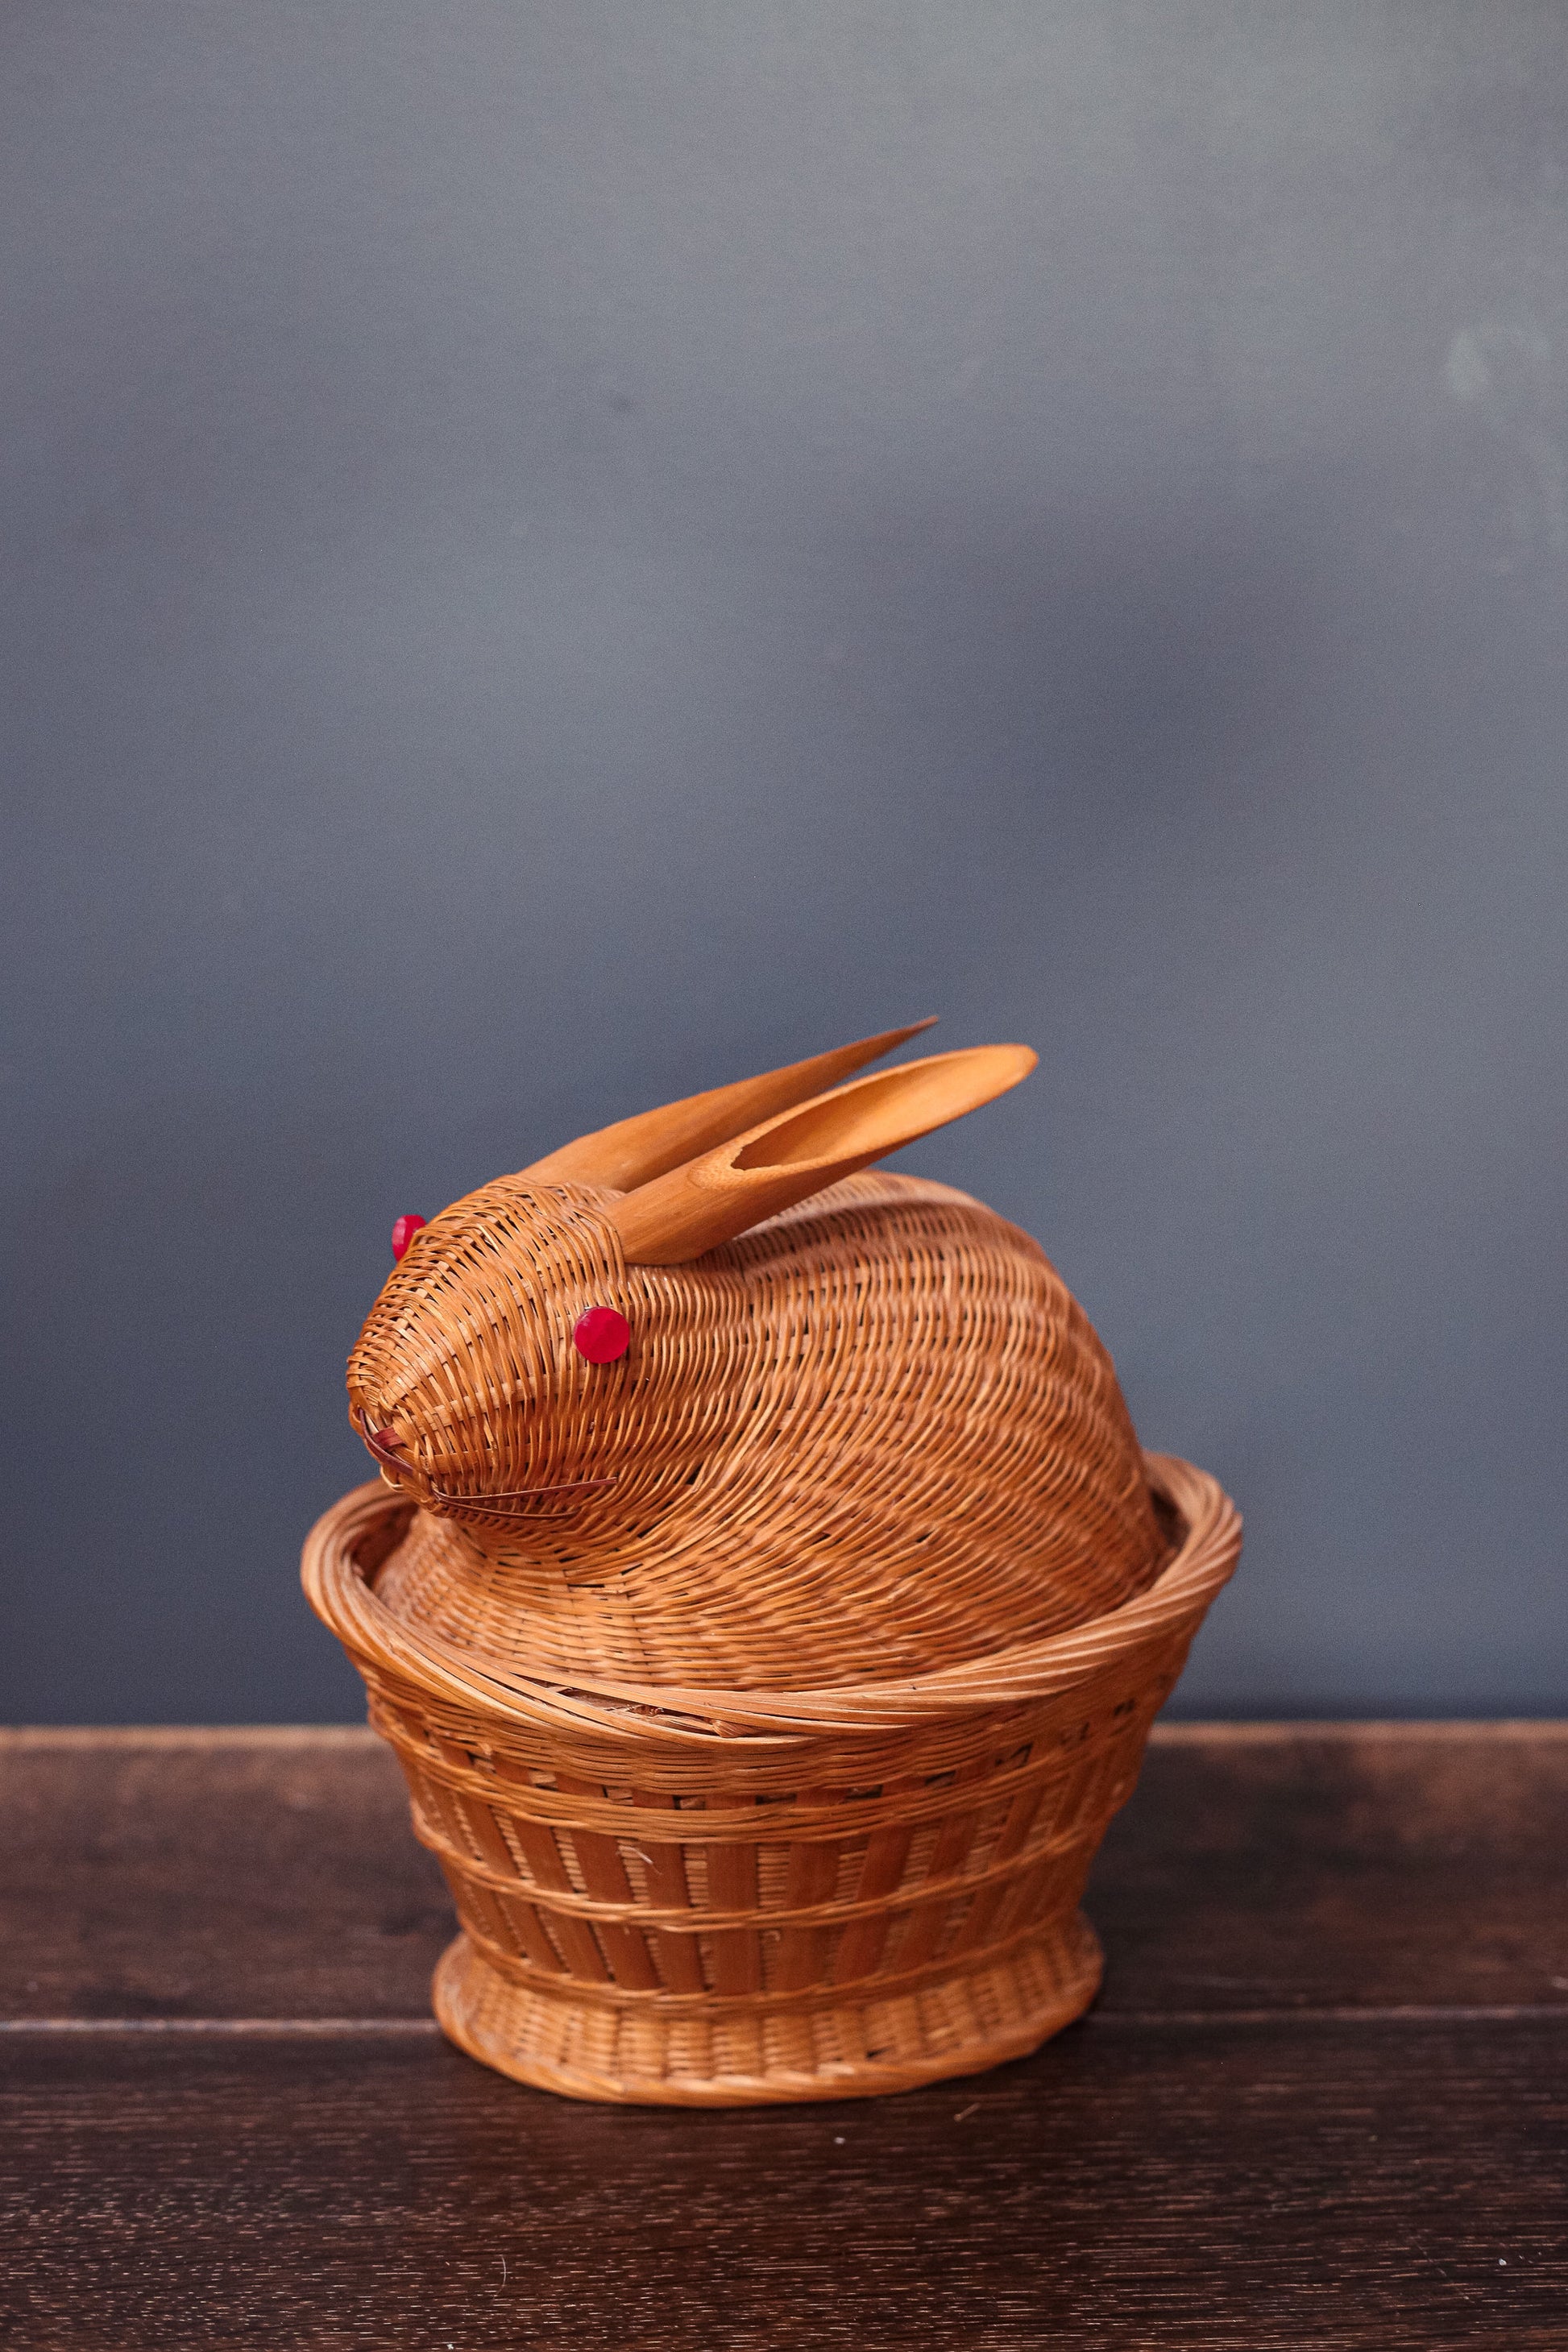 Rabbit Shaped Wicker/Rattan Basket with Lid - Vintage Two Piece Decorative Bunny Basket